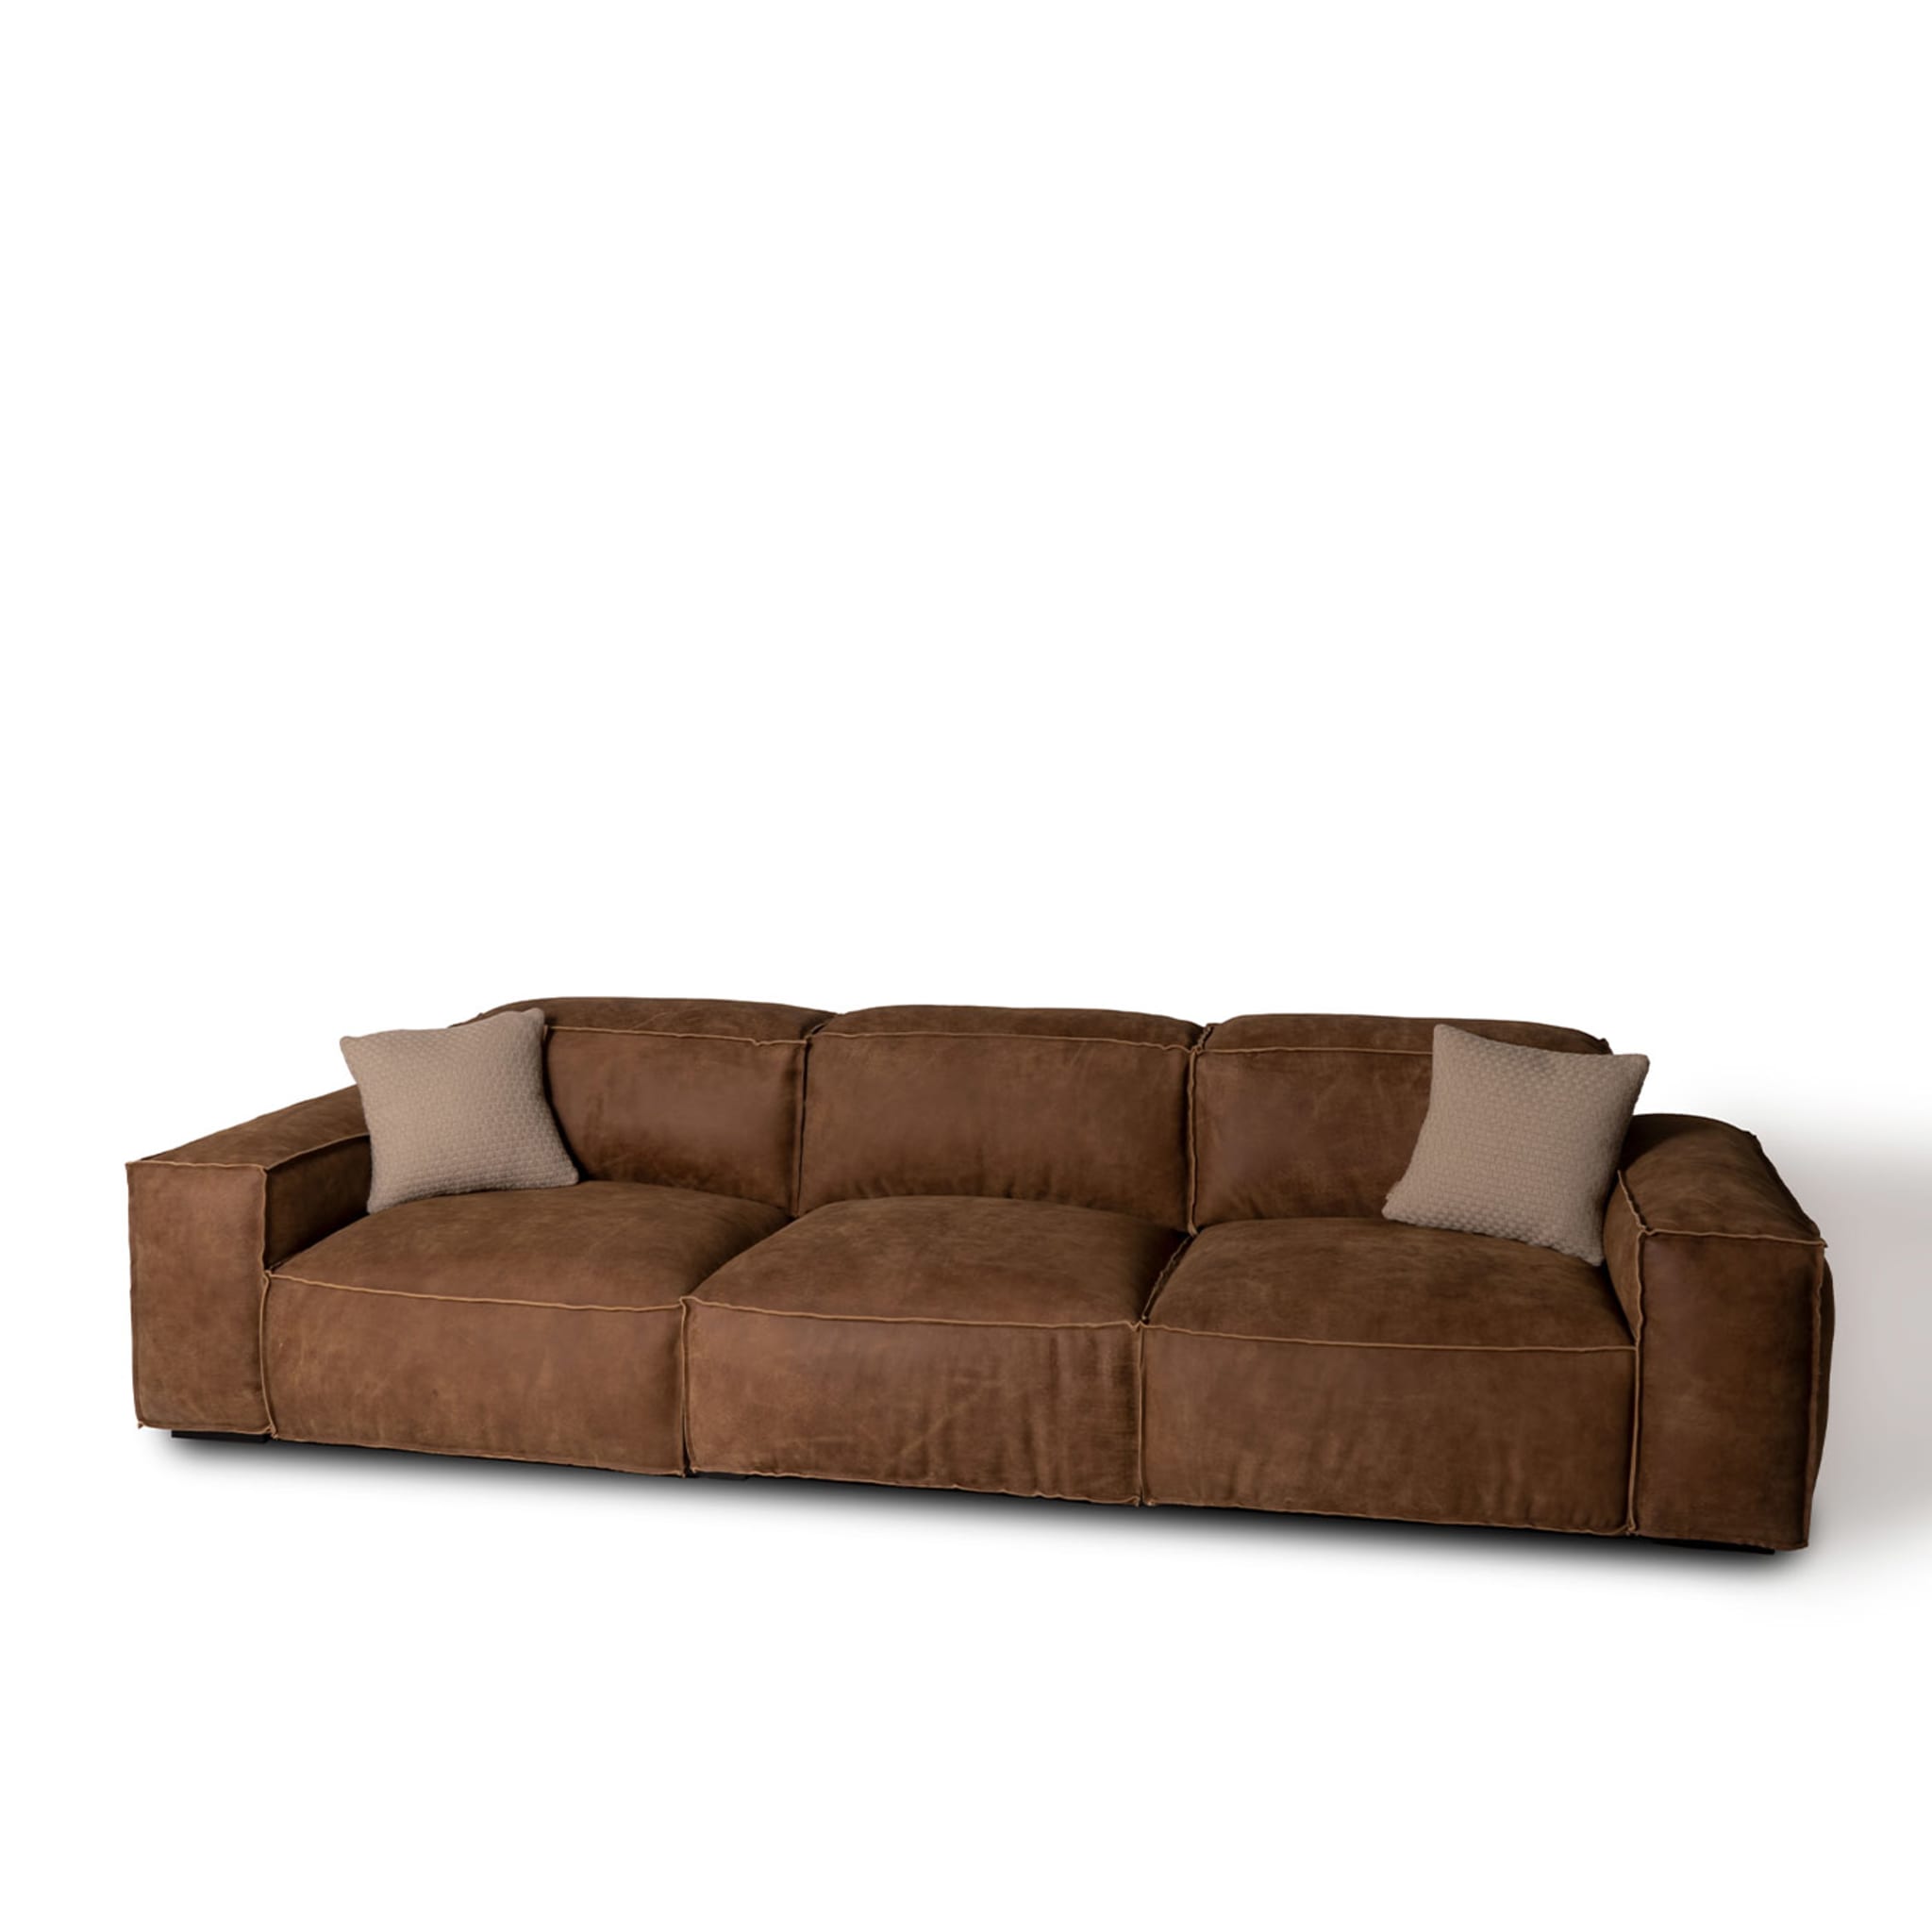 Placido 3 Seater Sofa Maxi Tribeca Collection - Alternative view 1